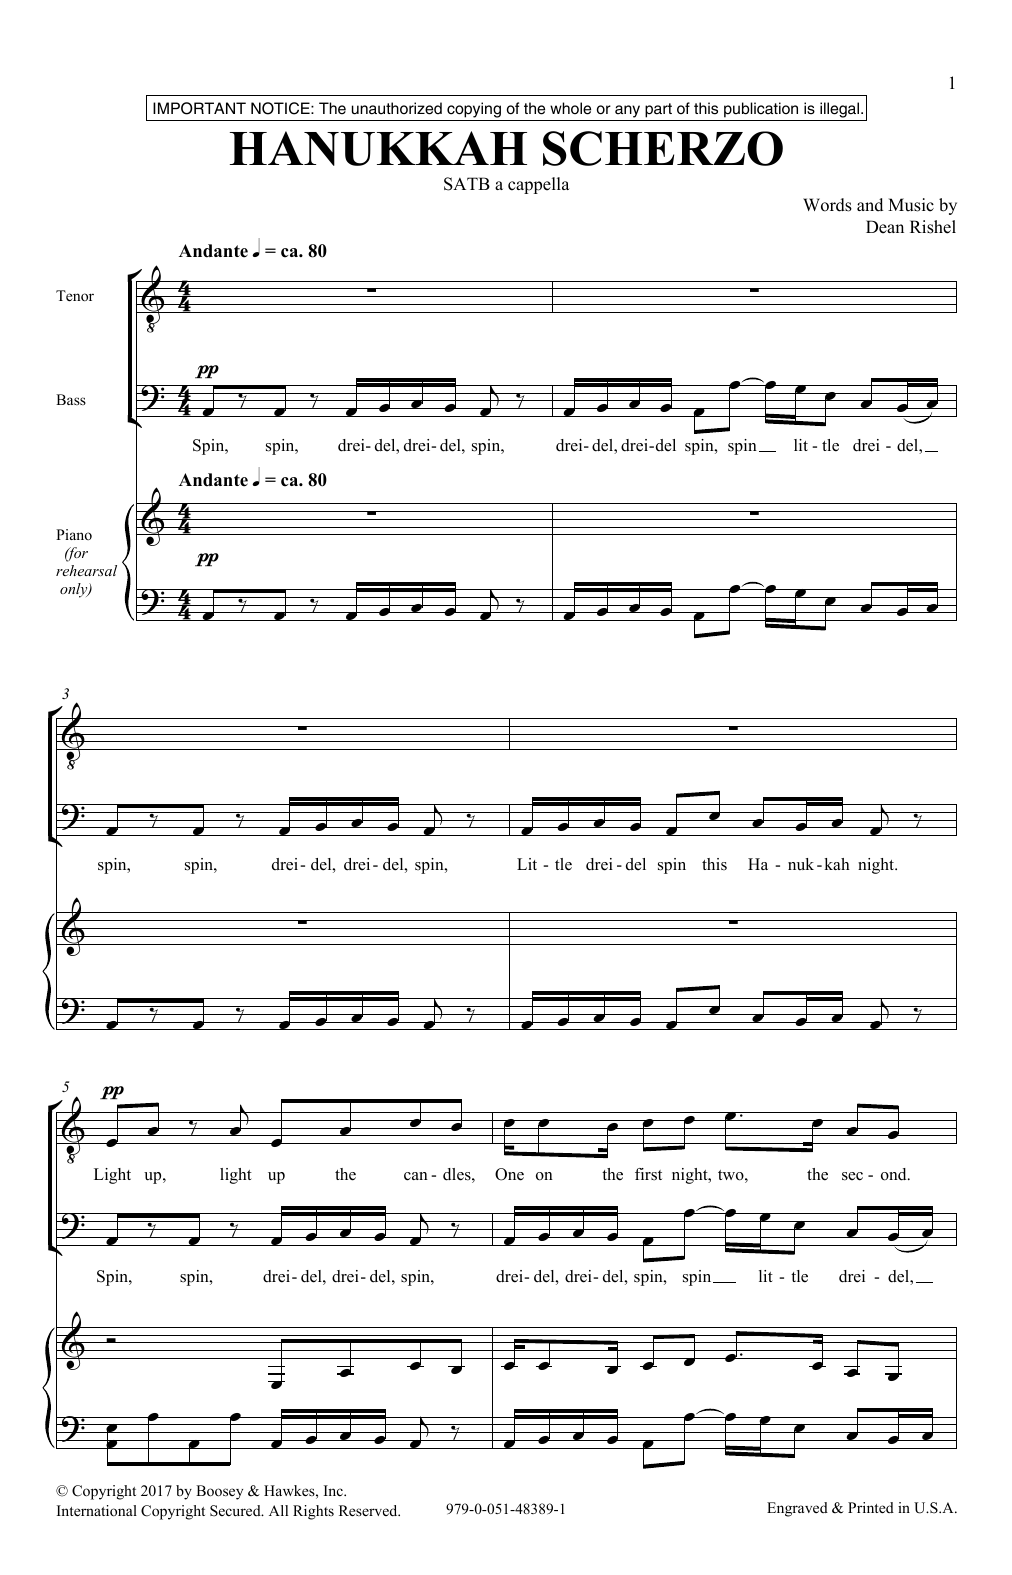 Download Dean Rishel Hanukkah Scherzo Sheet Music and learn how to play SATB Choir PDF digital score in minutes